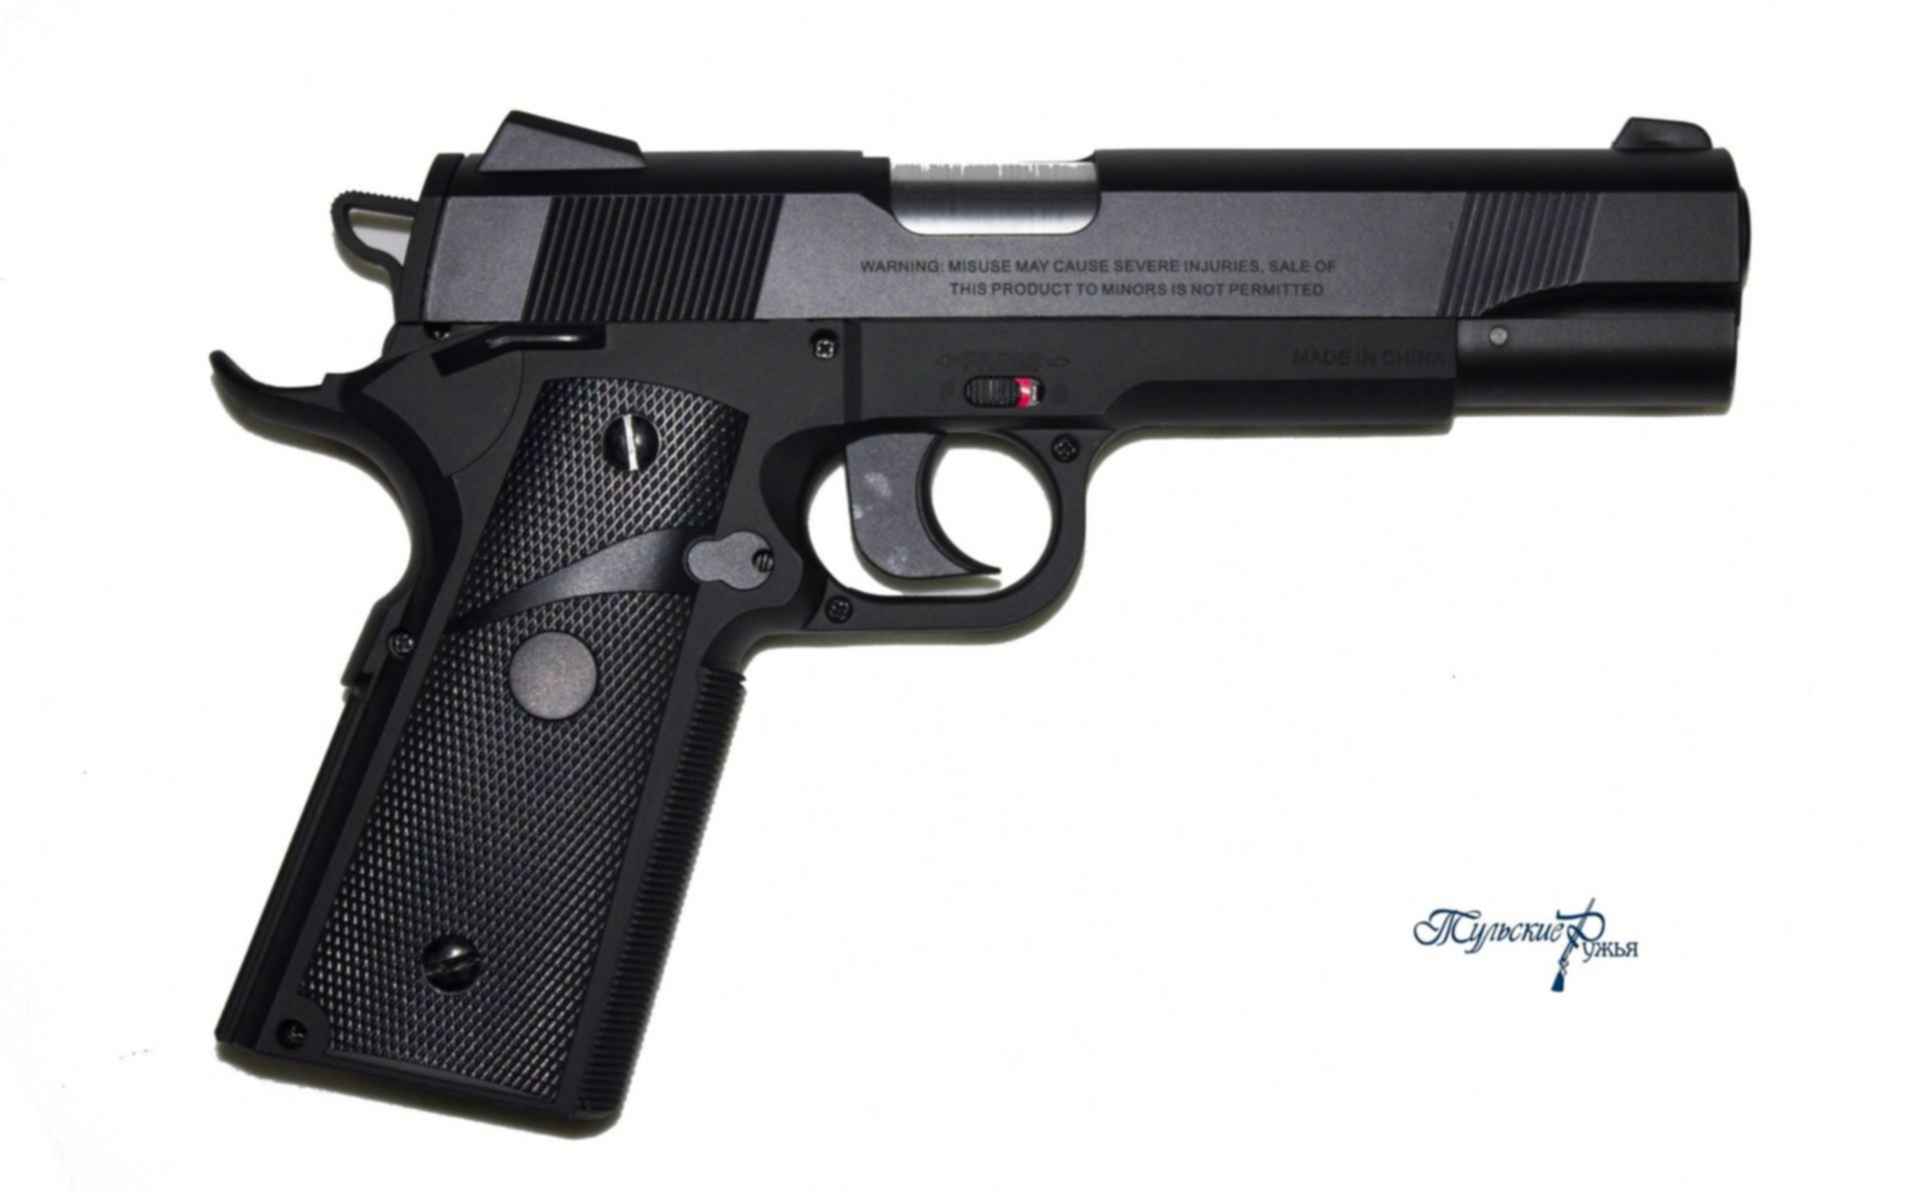 The product is not permitted. Ремкомплект для пневматического пистолета сталкер s84. Разборка пистолета сталкер s1911g.